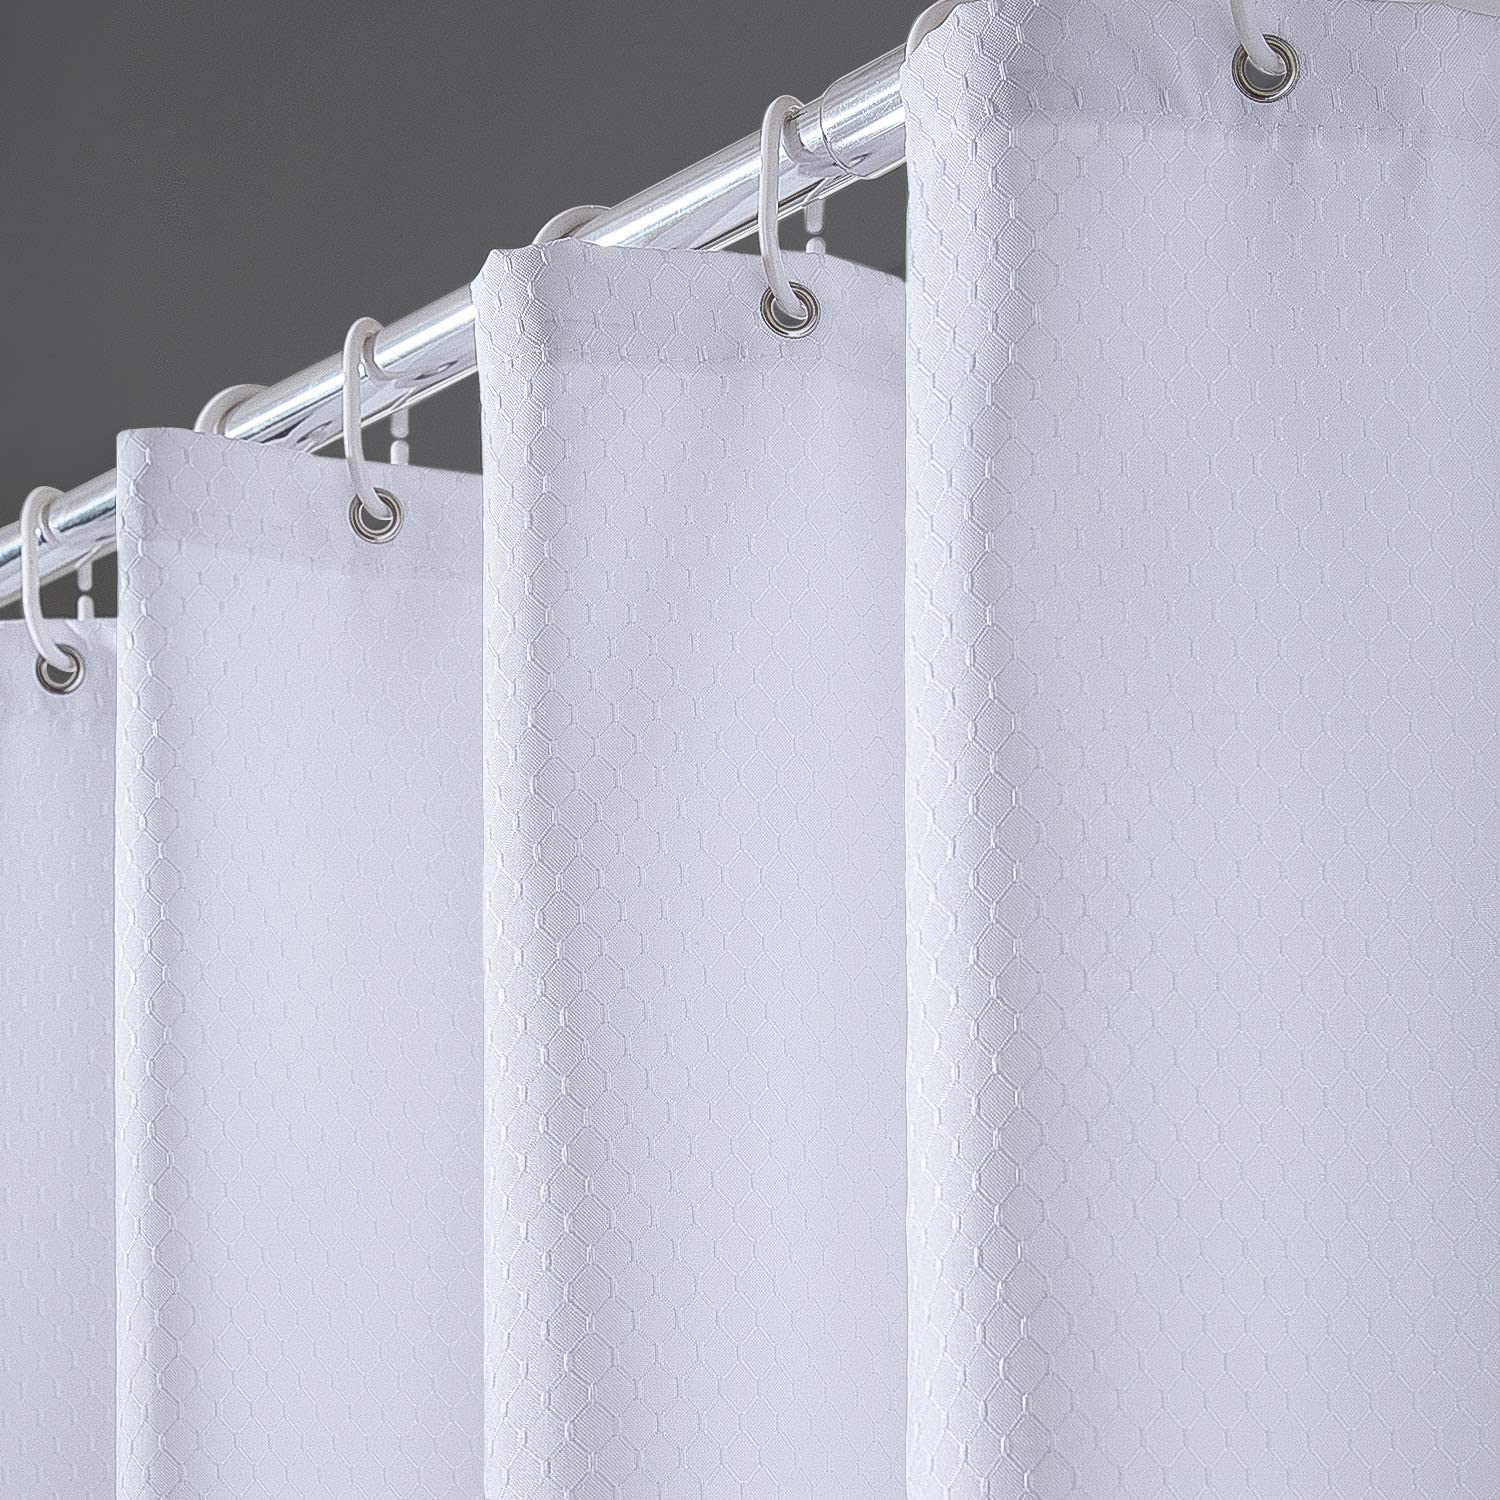 cuadros 240 * 200cm B*H yishu cuadros cortina de ducha bañera cortina resistente al agua antimoho para Incluye 12 anillos de cortina de ducha para cuarto de baño 180 x 180/180 x 200/240 x 200 cm 